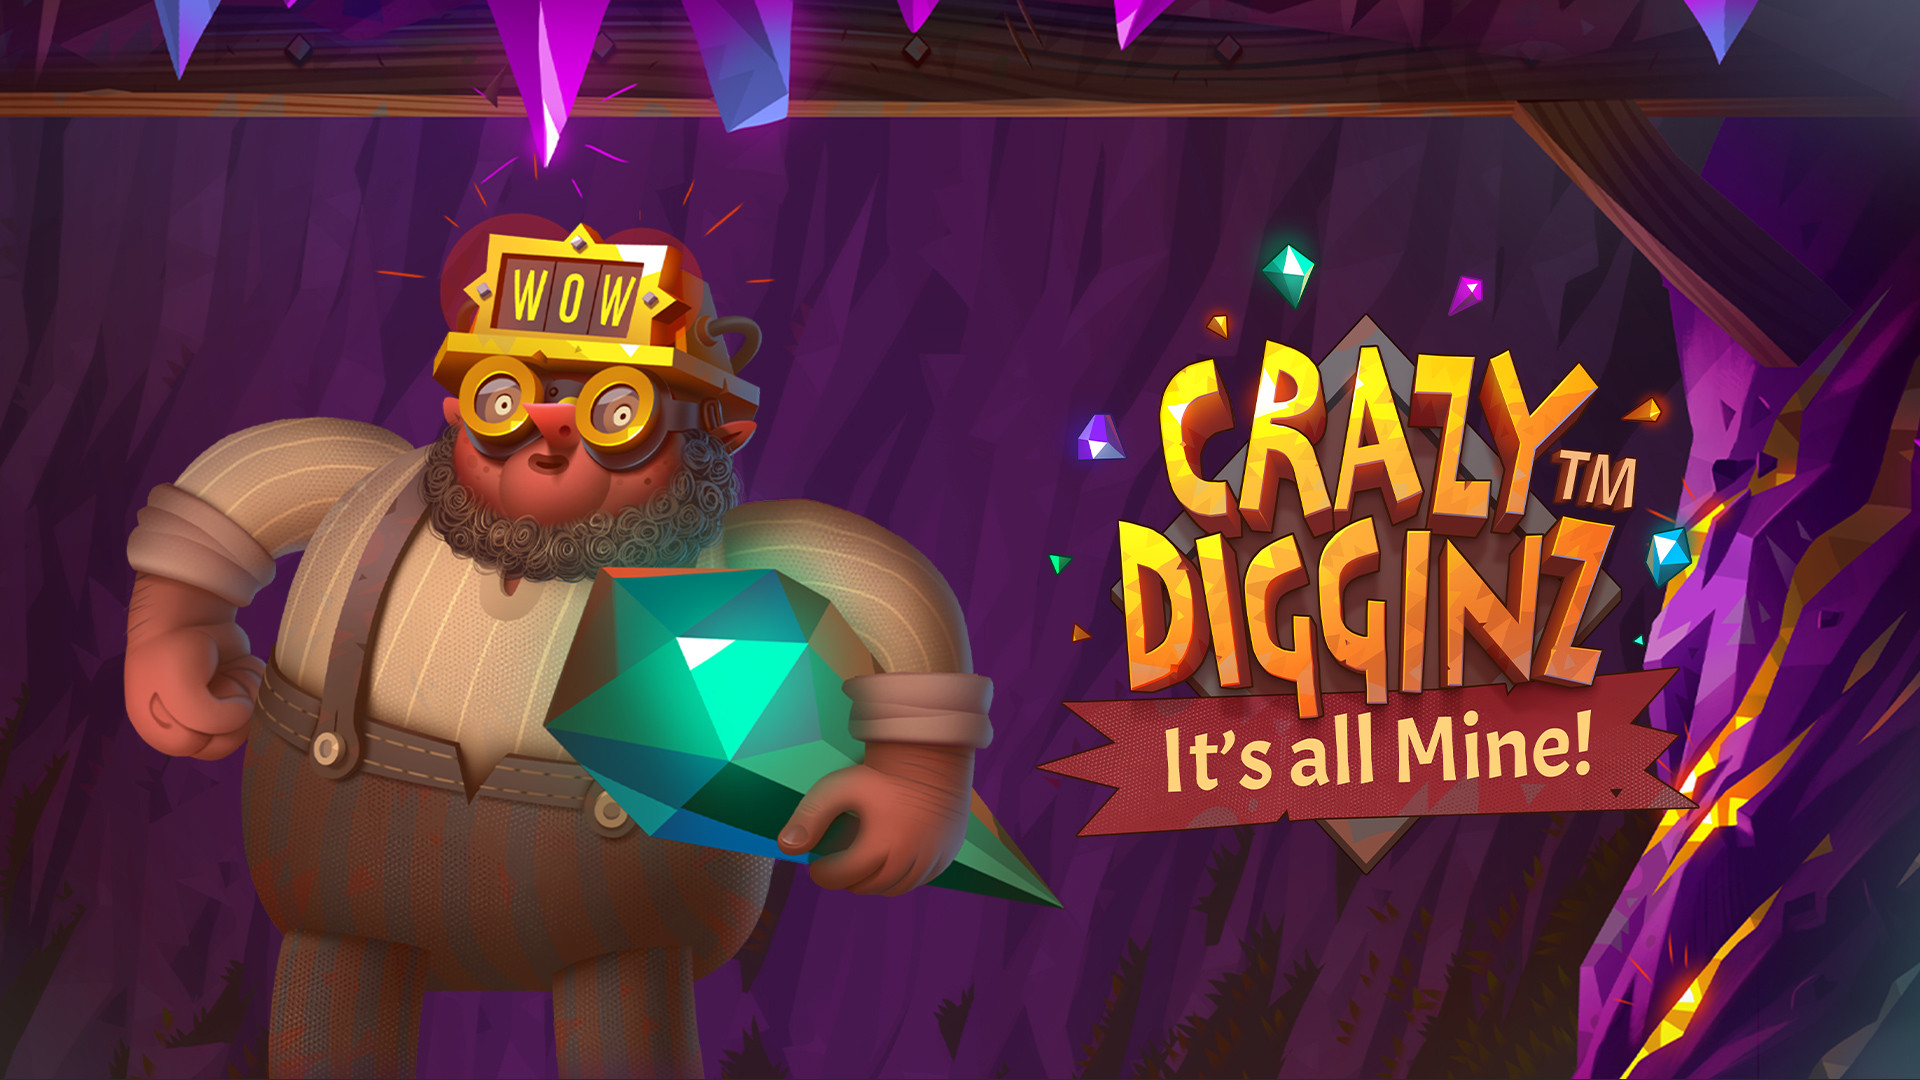 Crazy Digginz - It's all Mine!